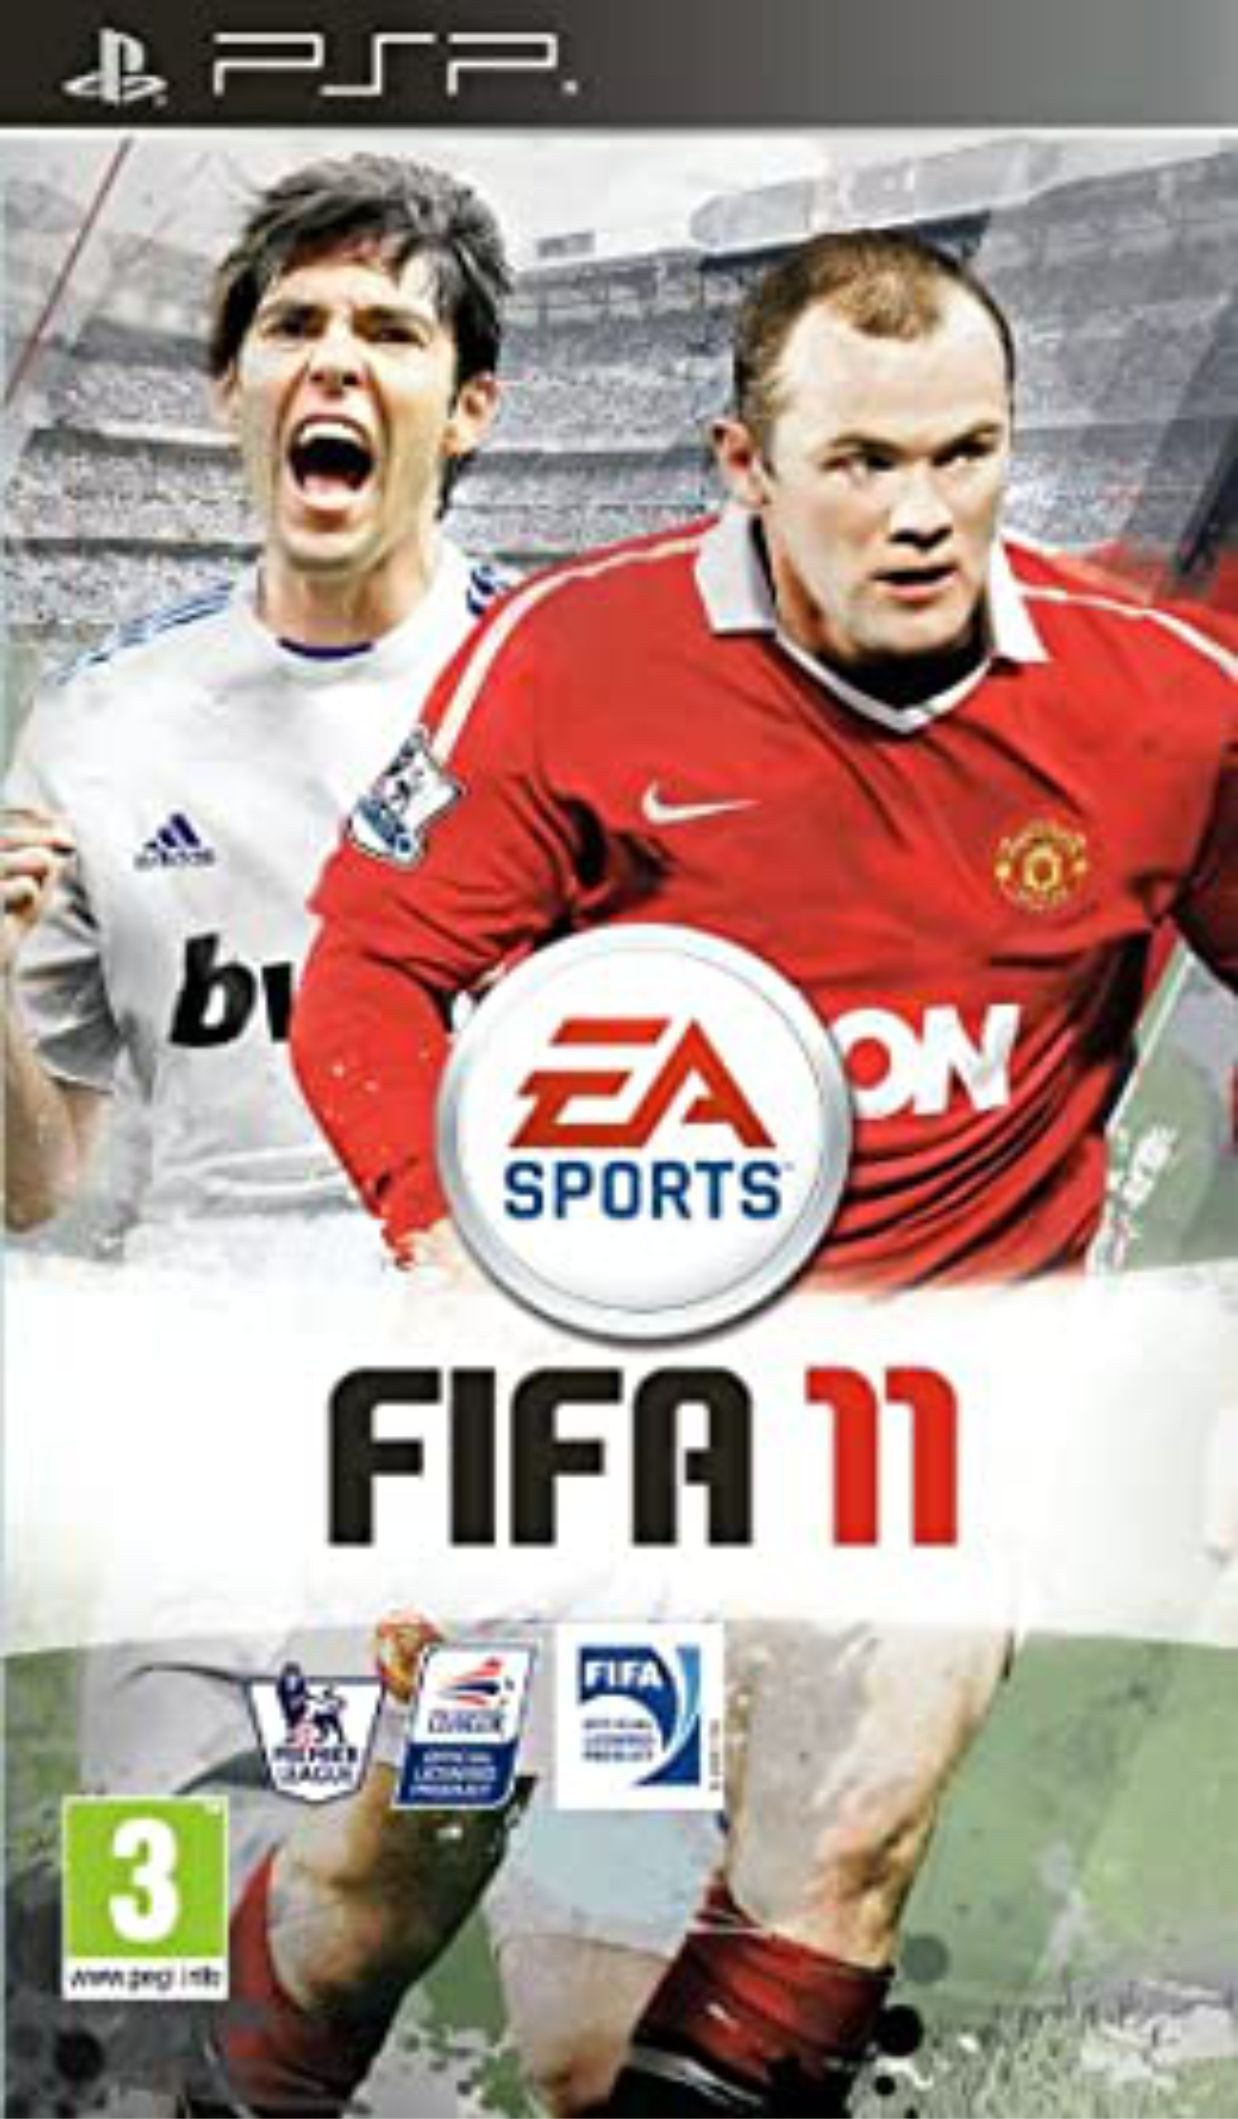 PSP FIFA 11